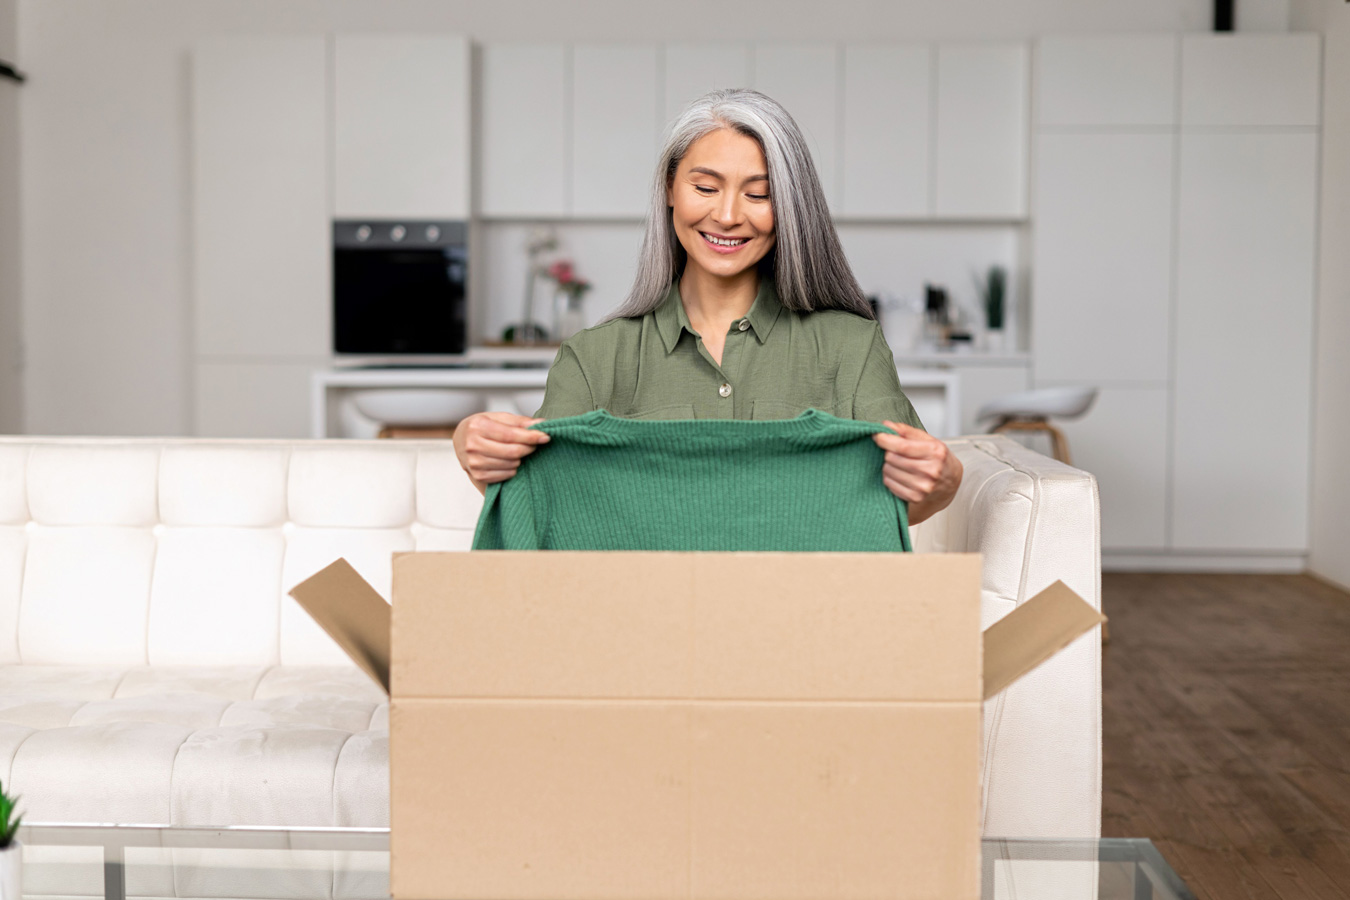 Woman with long grey hair unpacks jumper from cardboard box